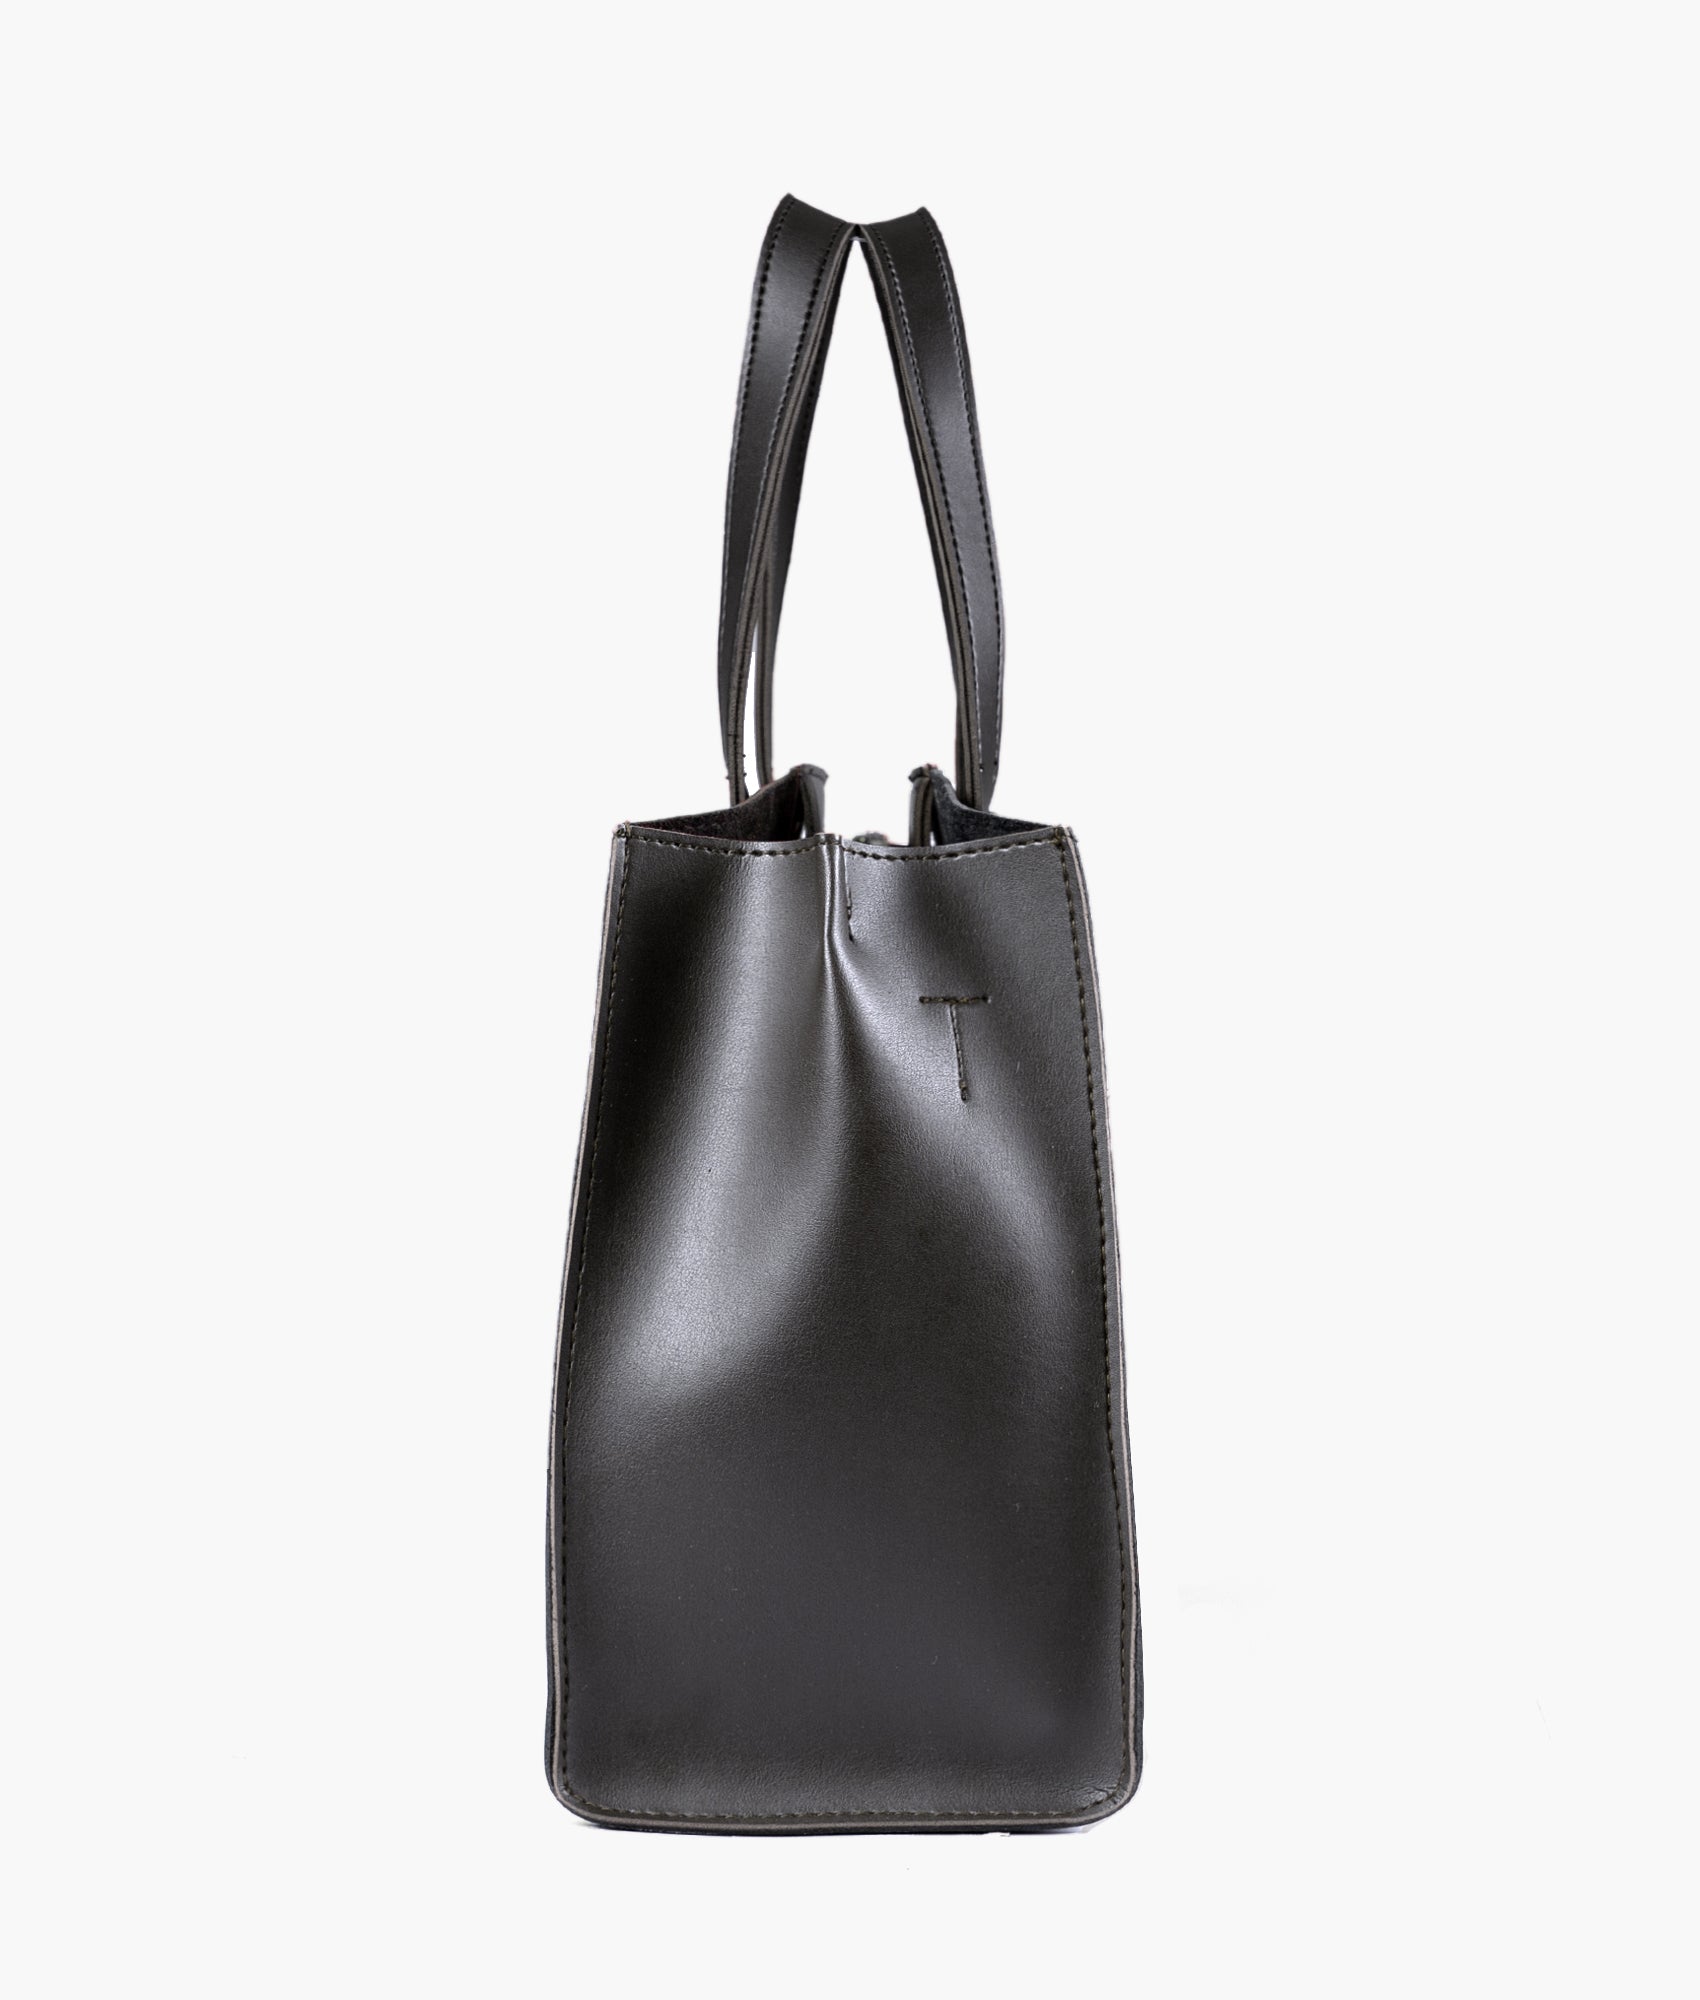 Black multi compartment satchel bag